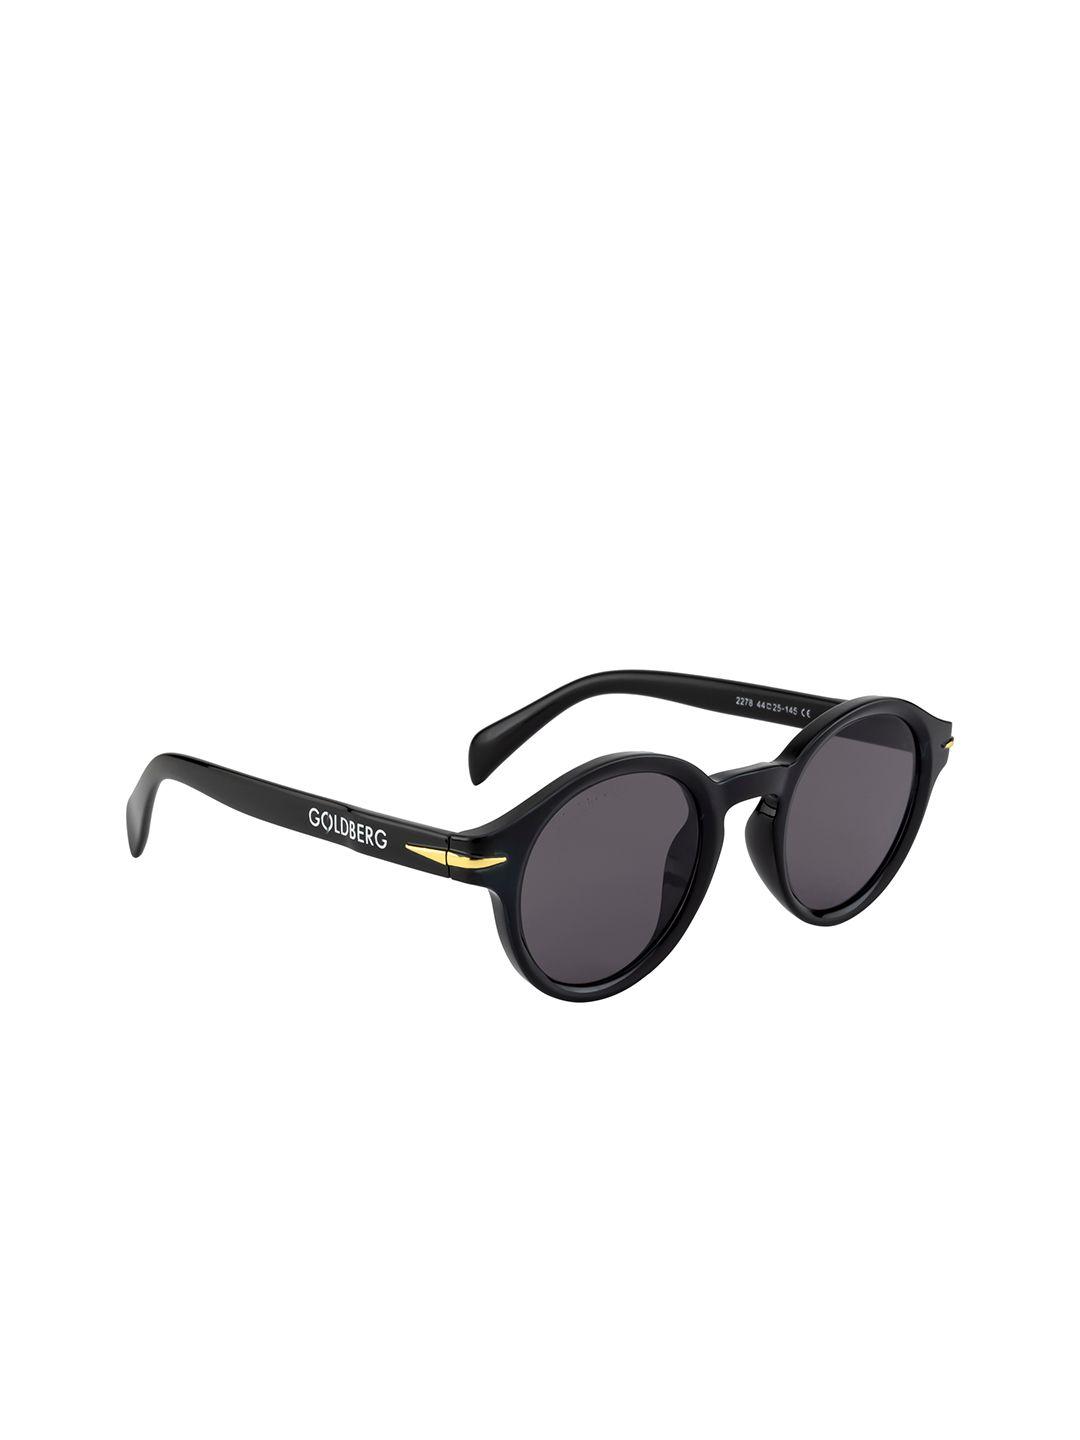 gold berg unisex black lens & black round sunglasses with uv protected lens